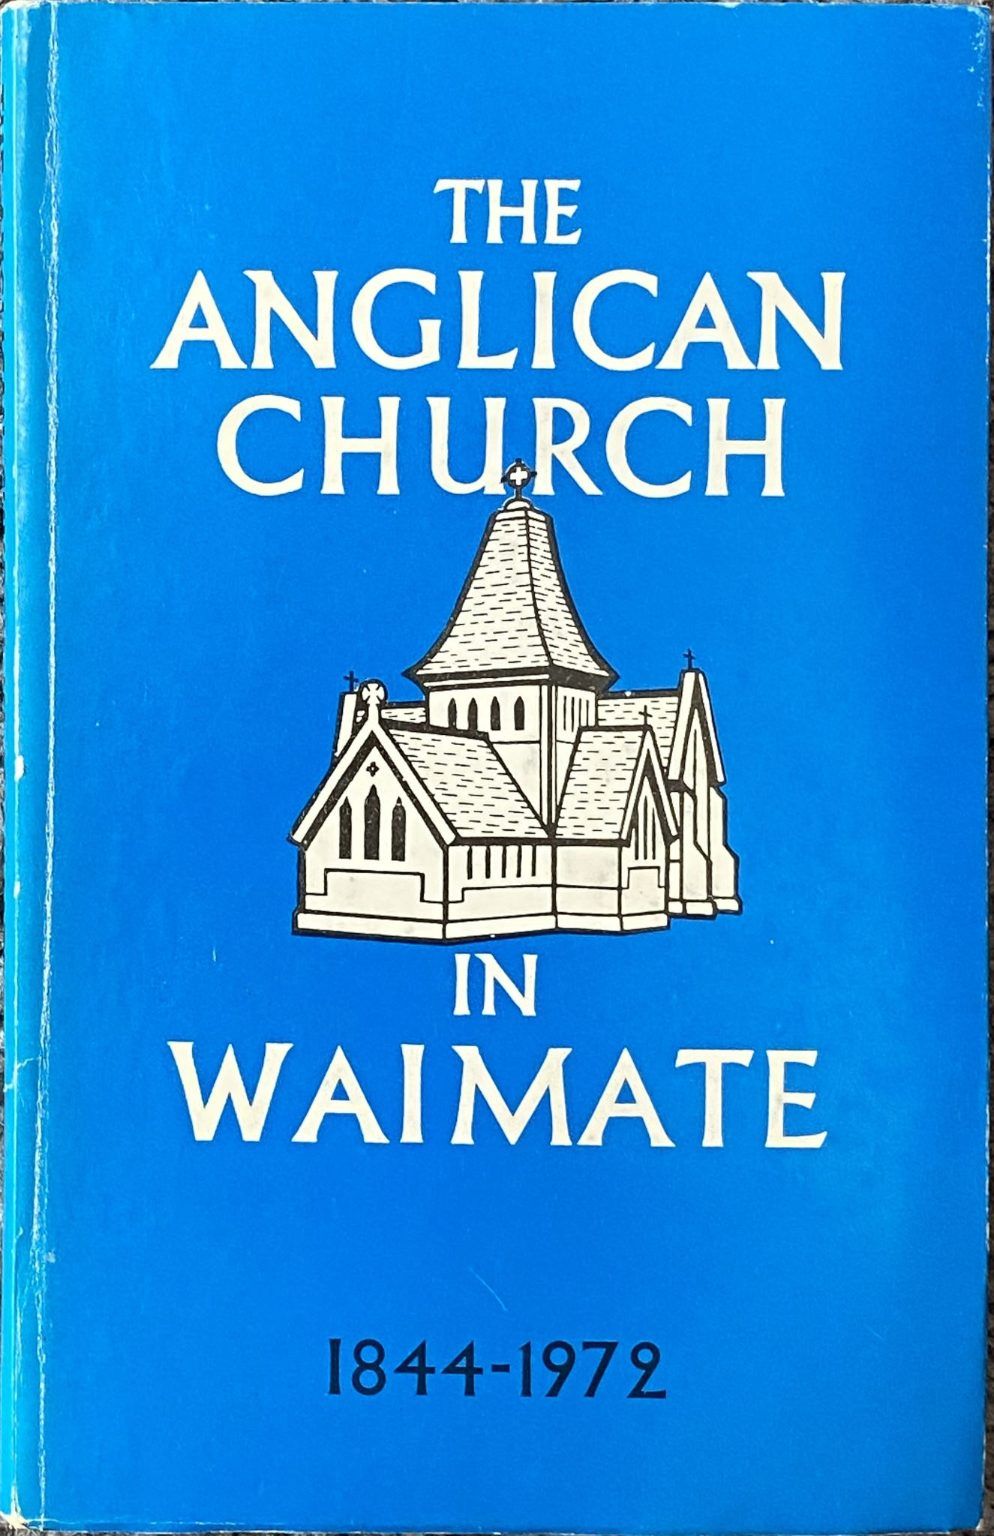 THE ANGLICAN CHURCH in Waimate 1844-1972